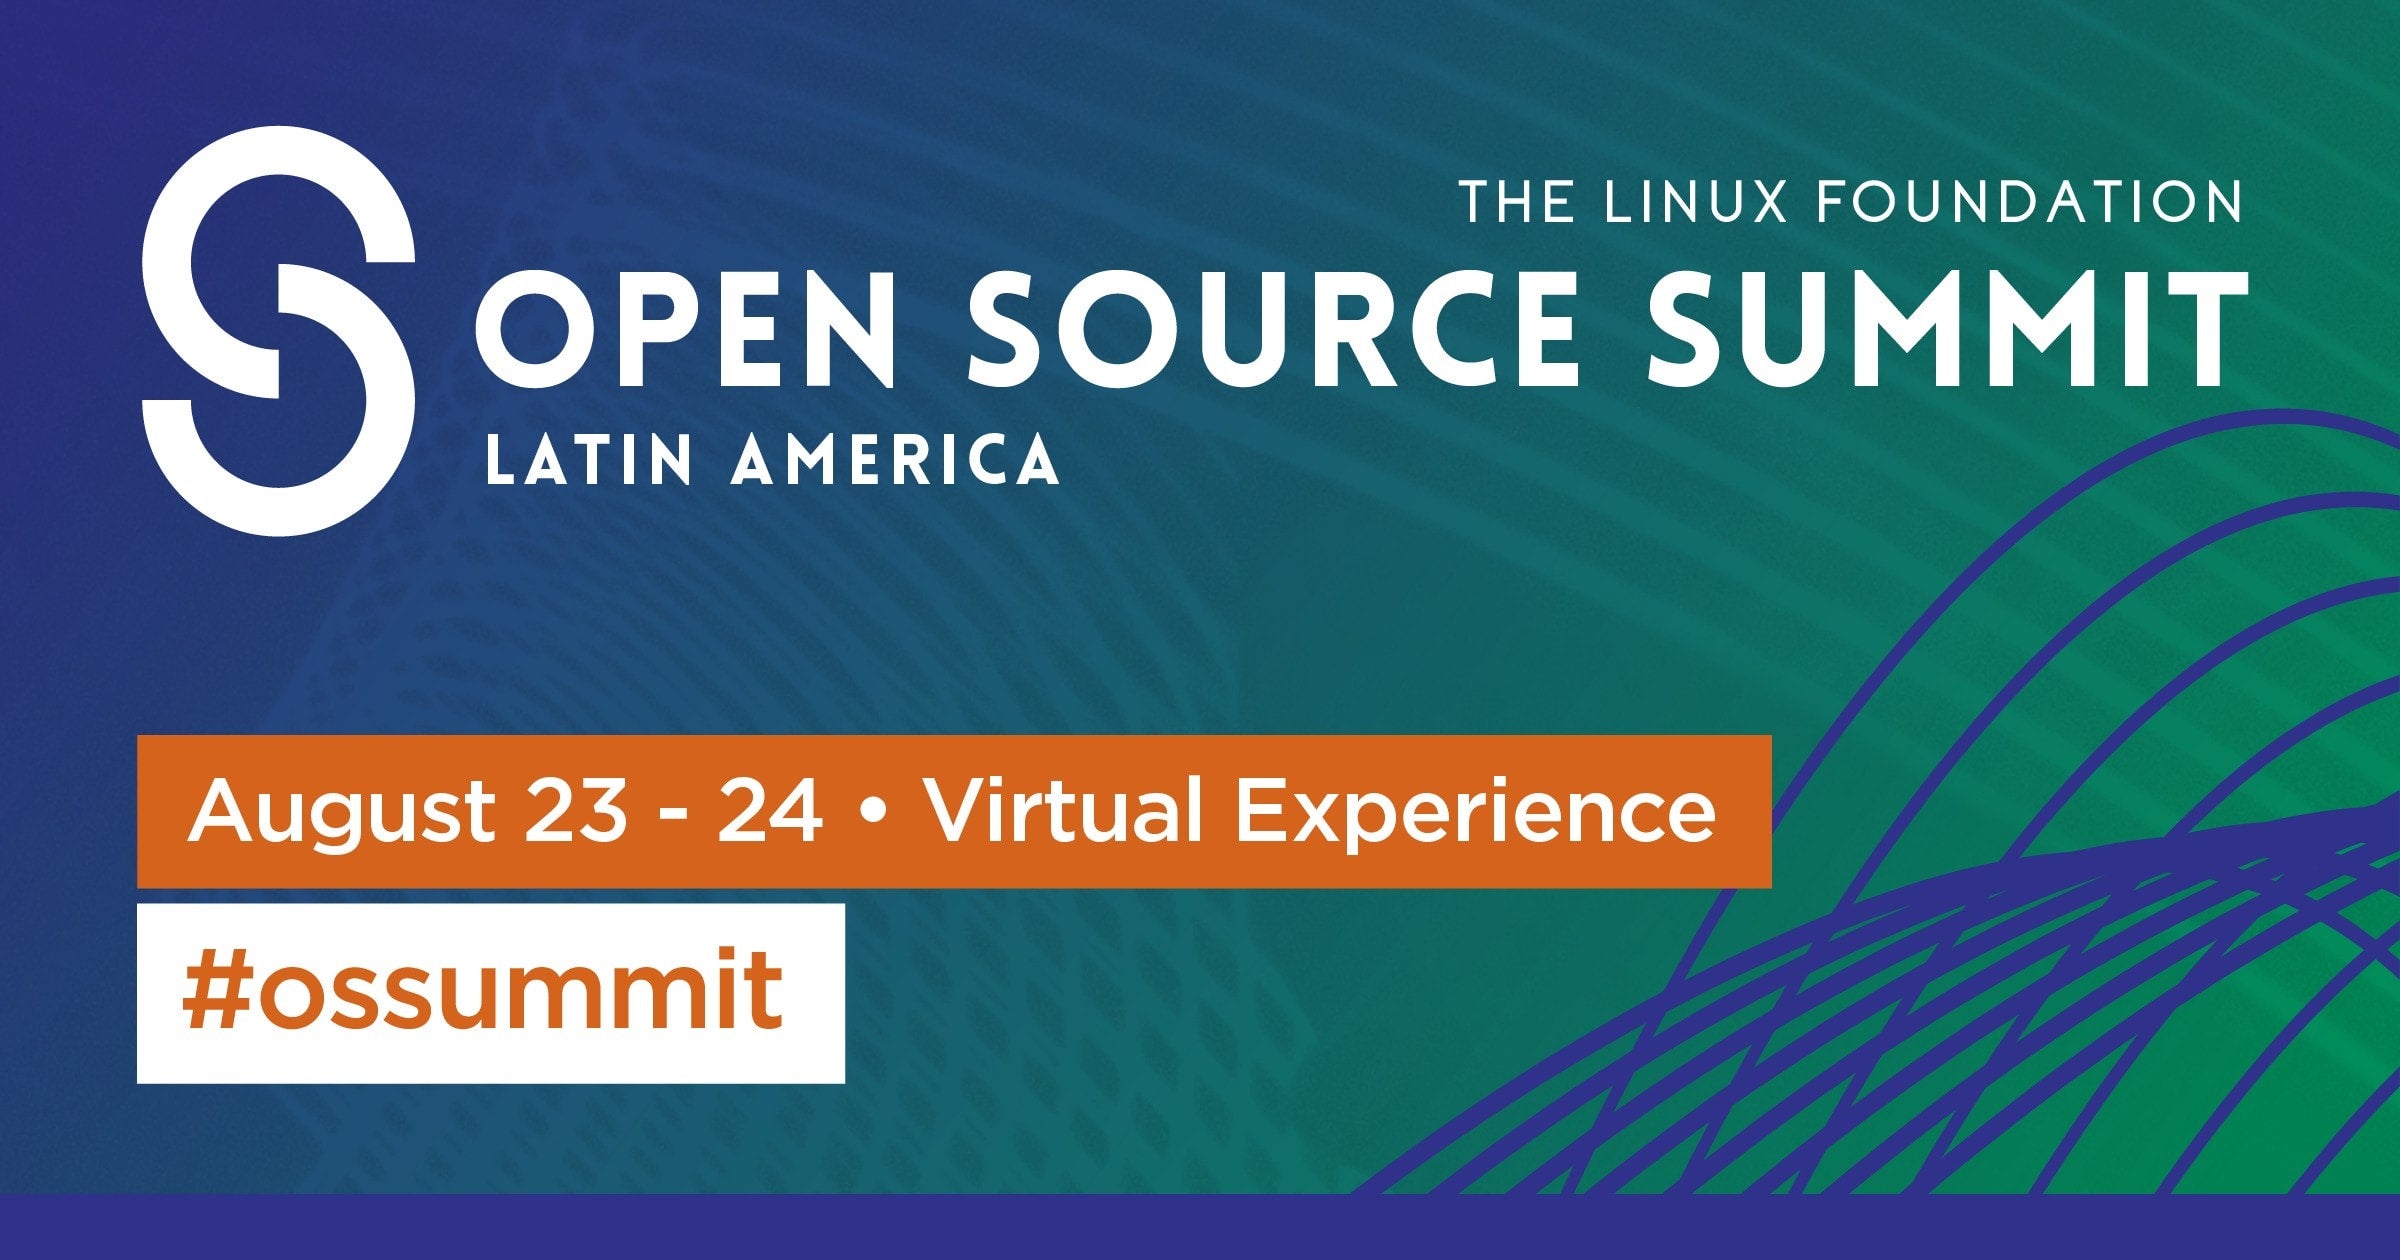 Open Source Summit Latin America LF Events